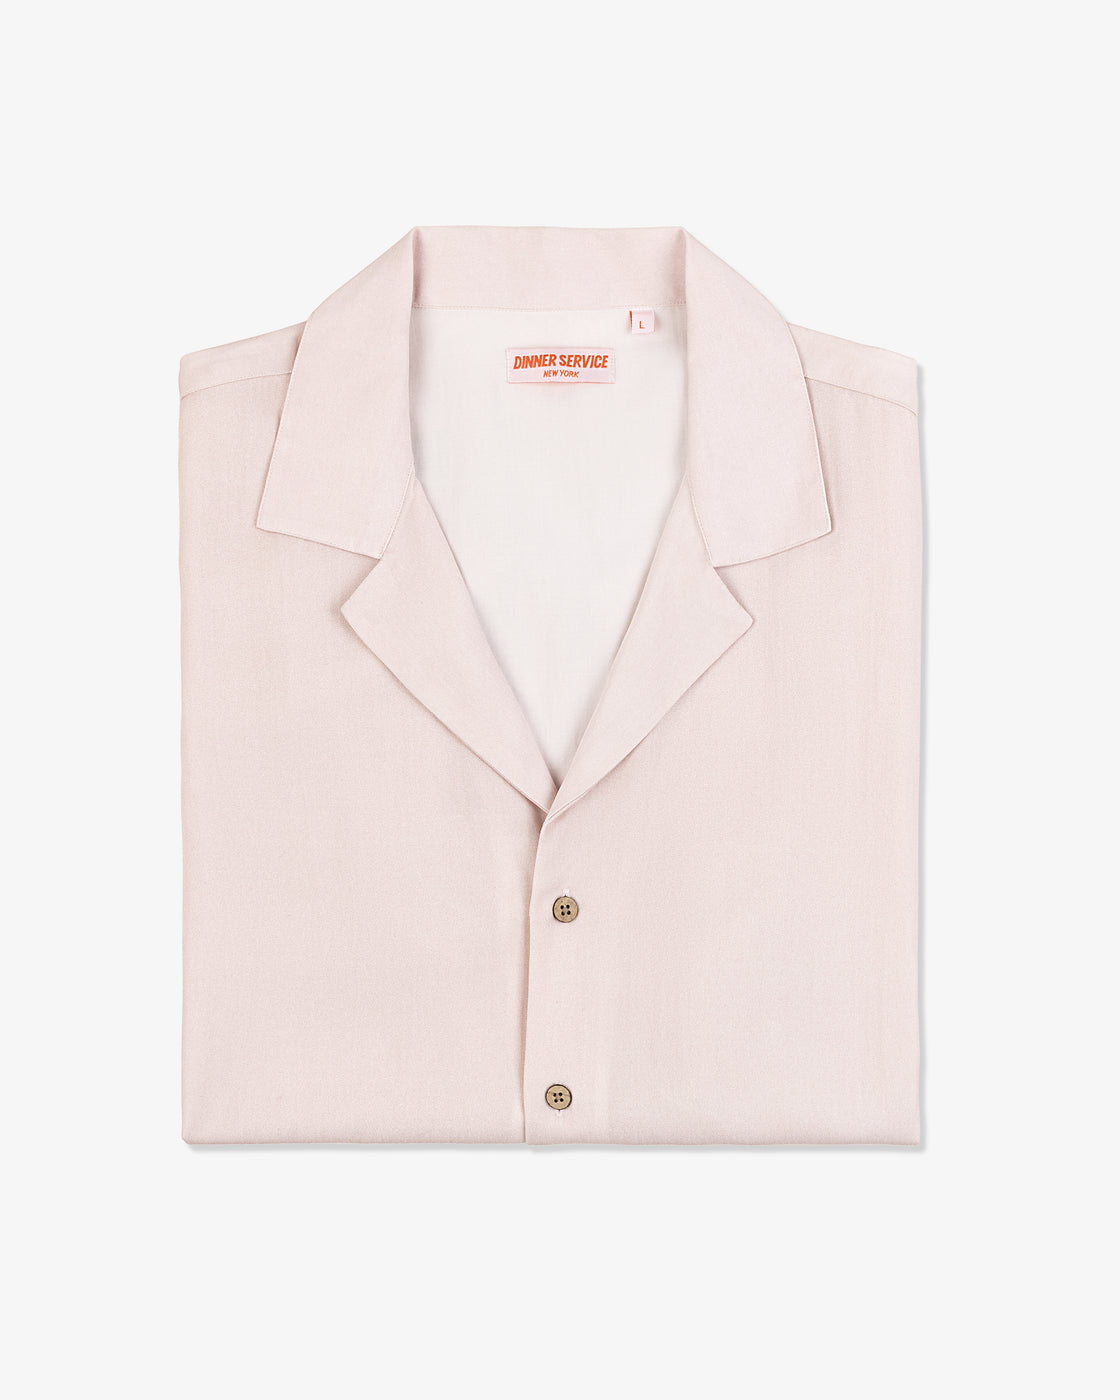 PROTEA x DSNY  Bowling Shirt - Light Pink